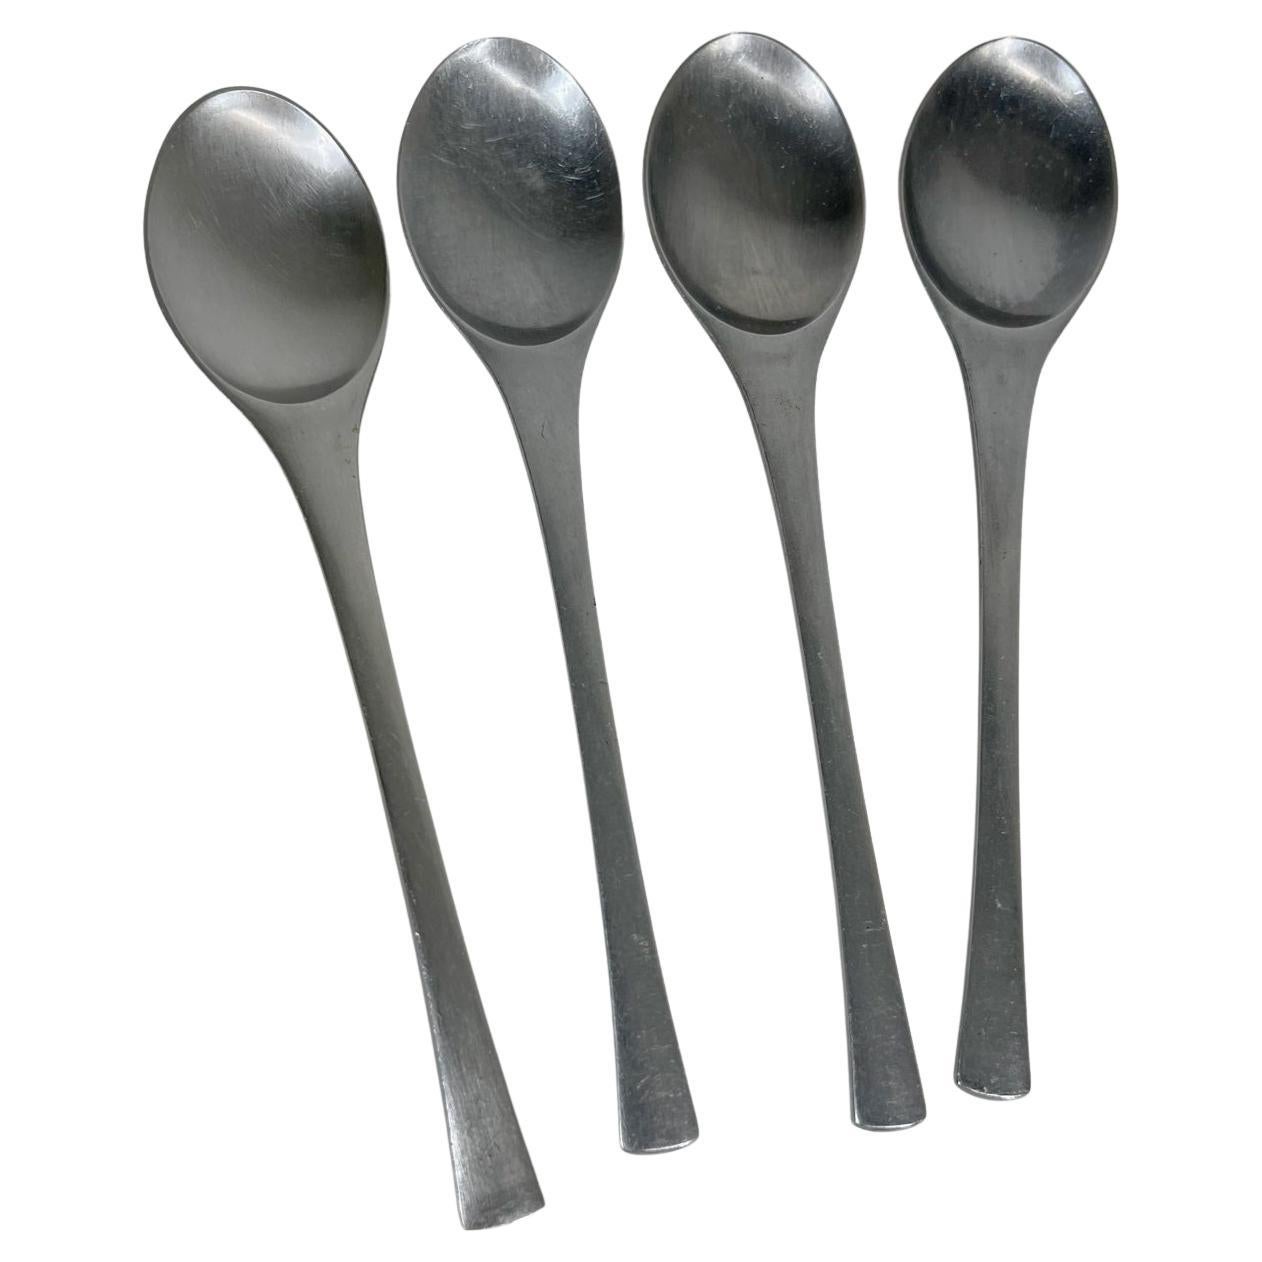 1950s Modern Dansk Set Four Spoons Odin IHQ Jens Quistgaard Germany